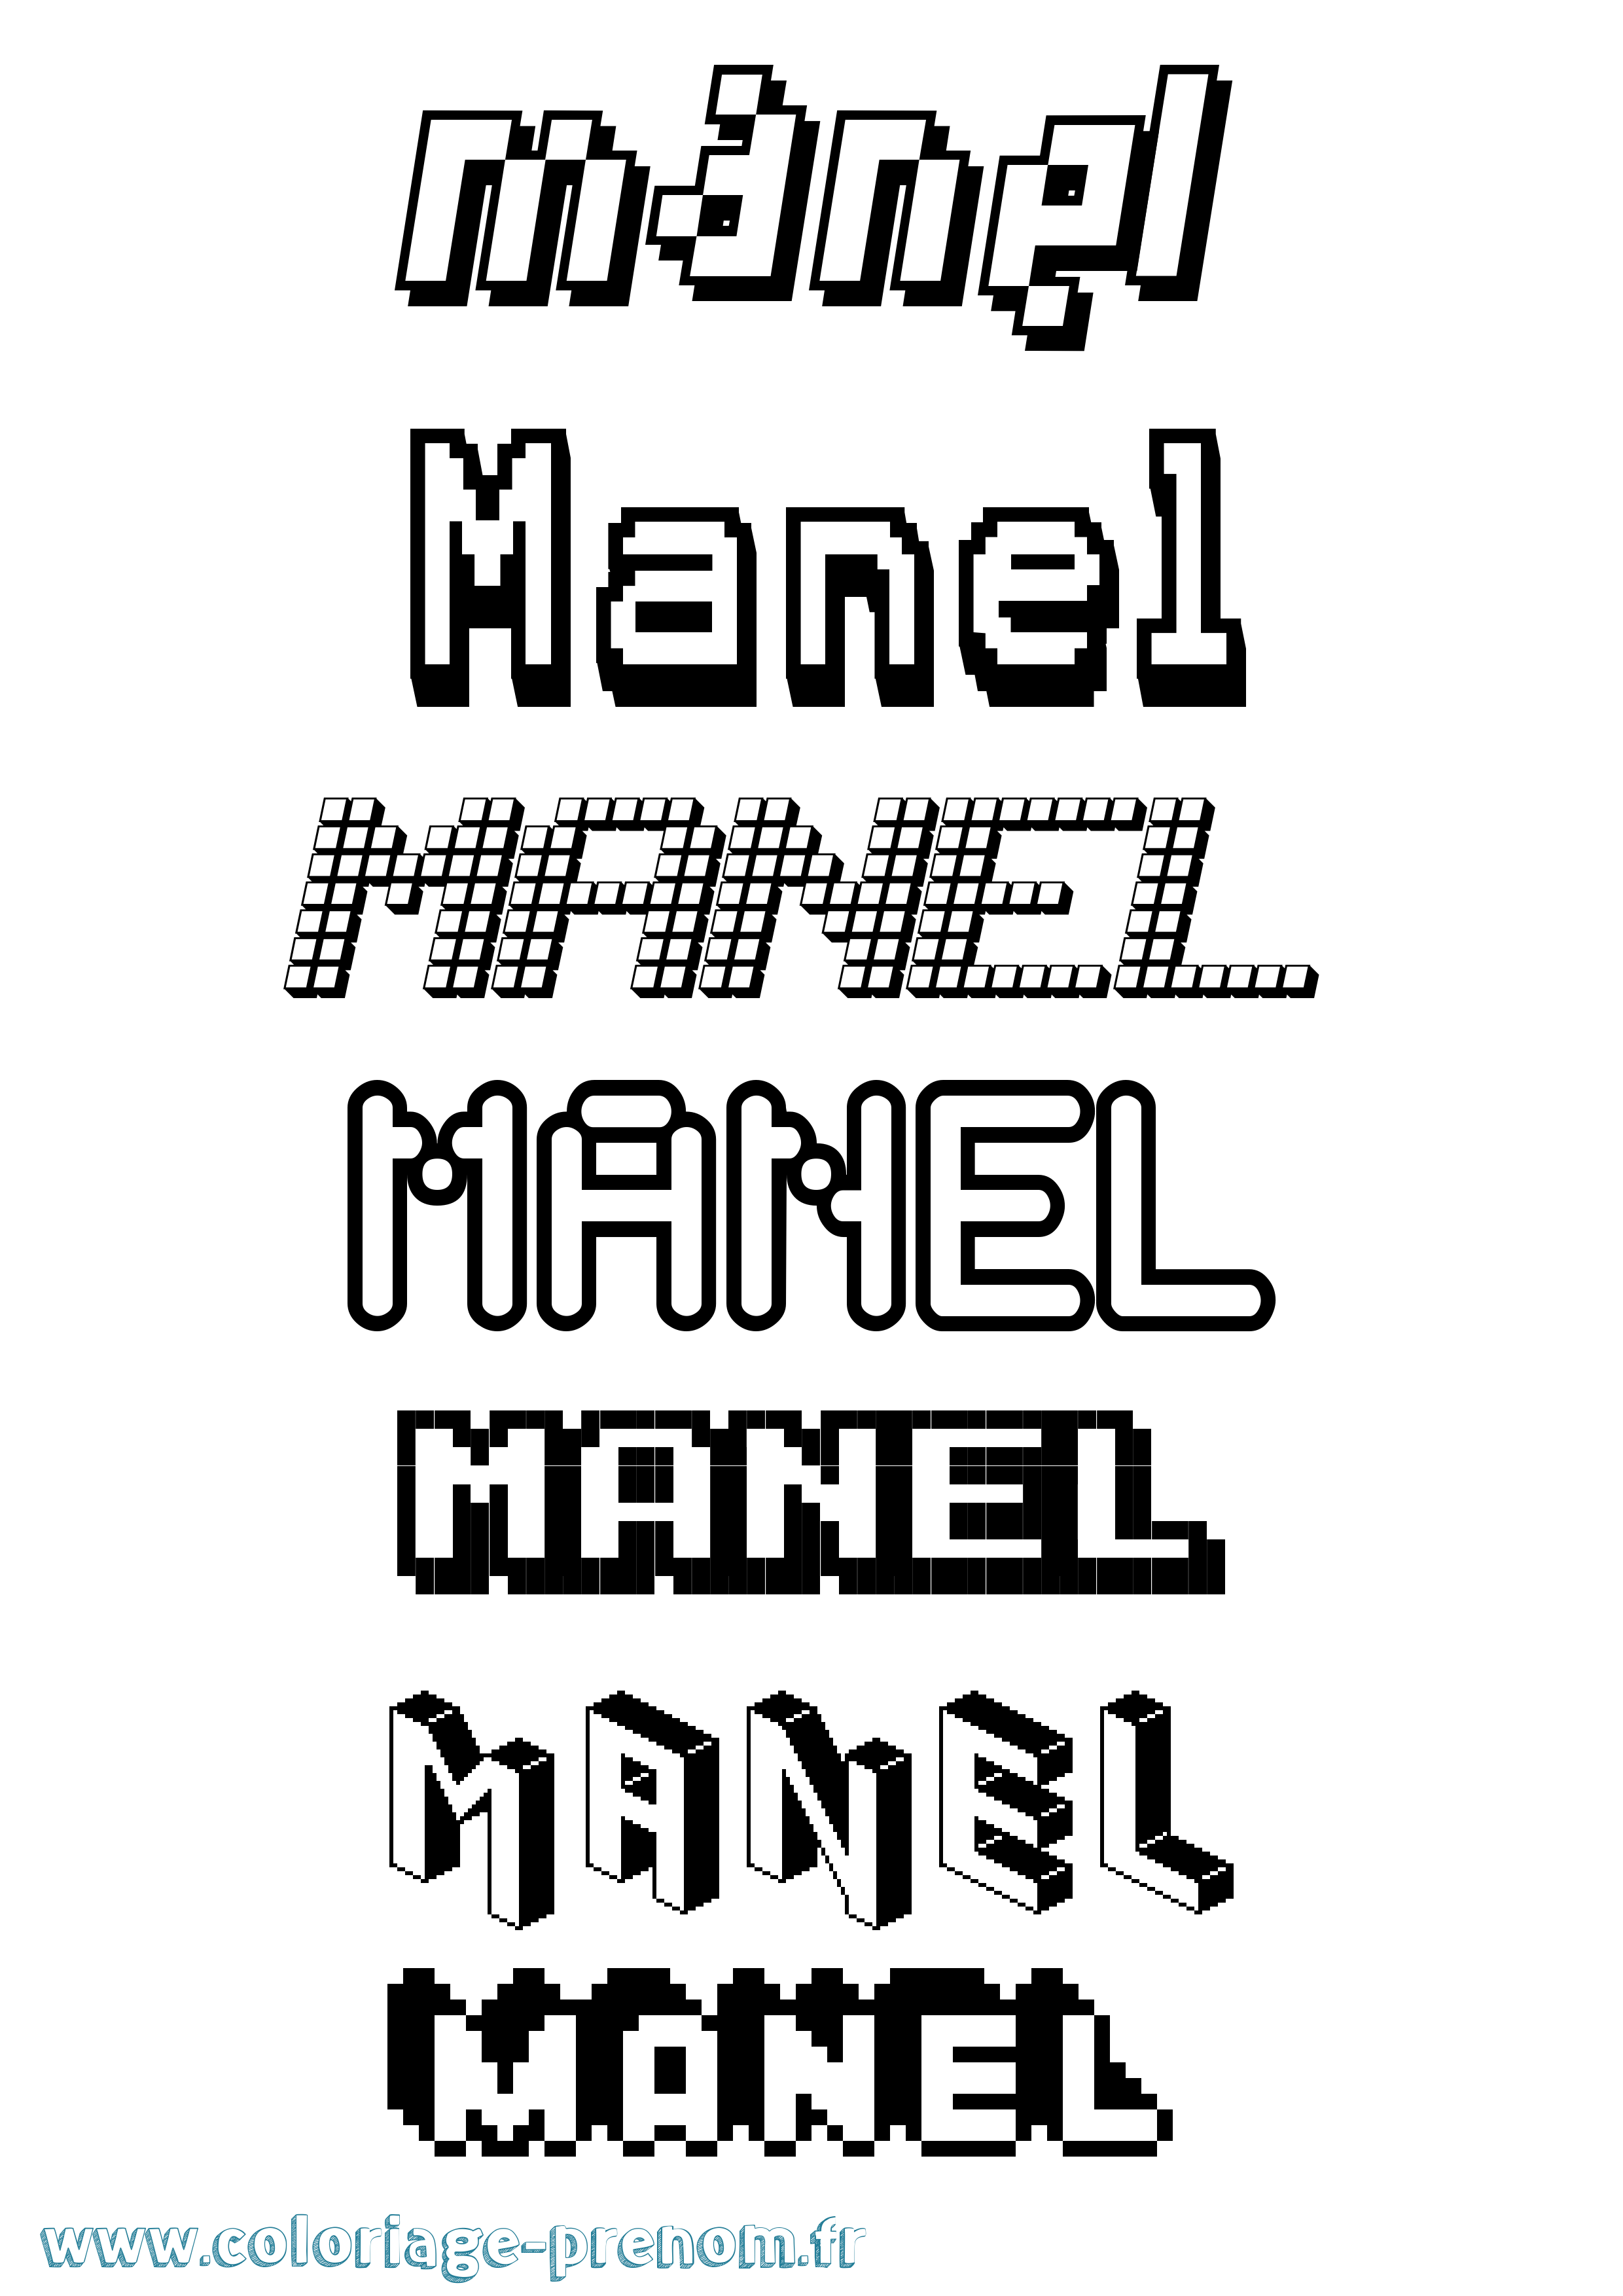 Coloriage prénom Manel